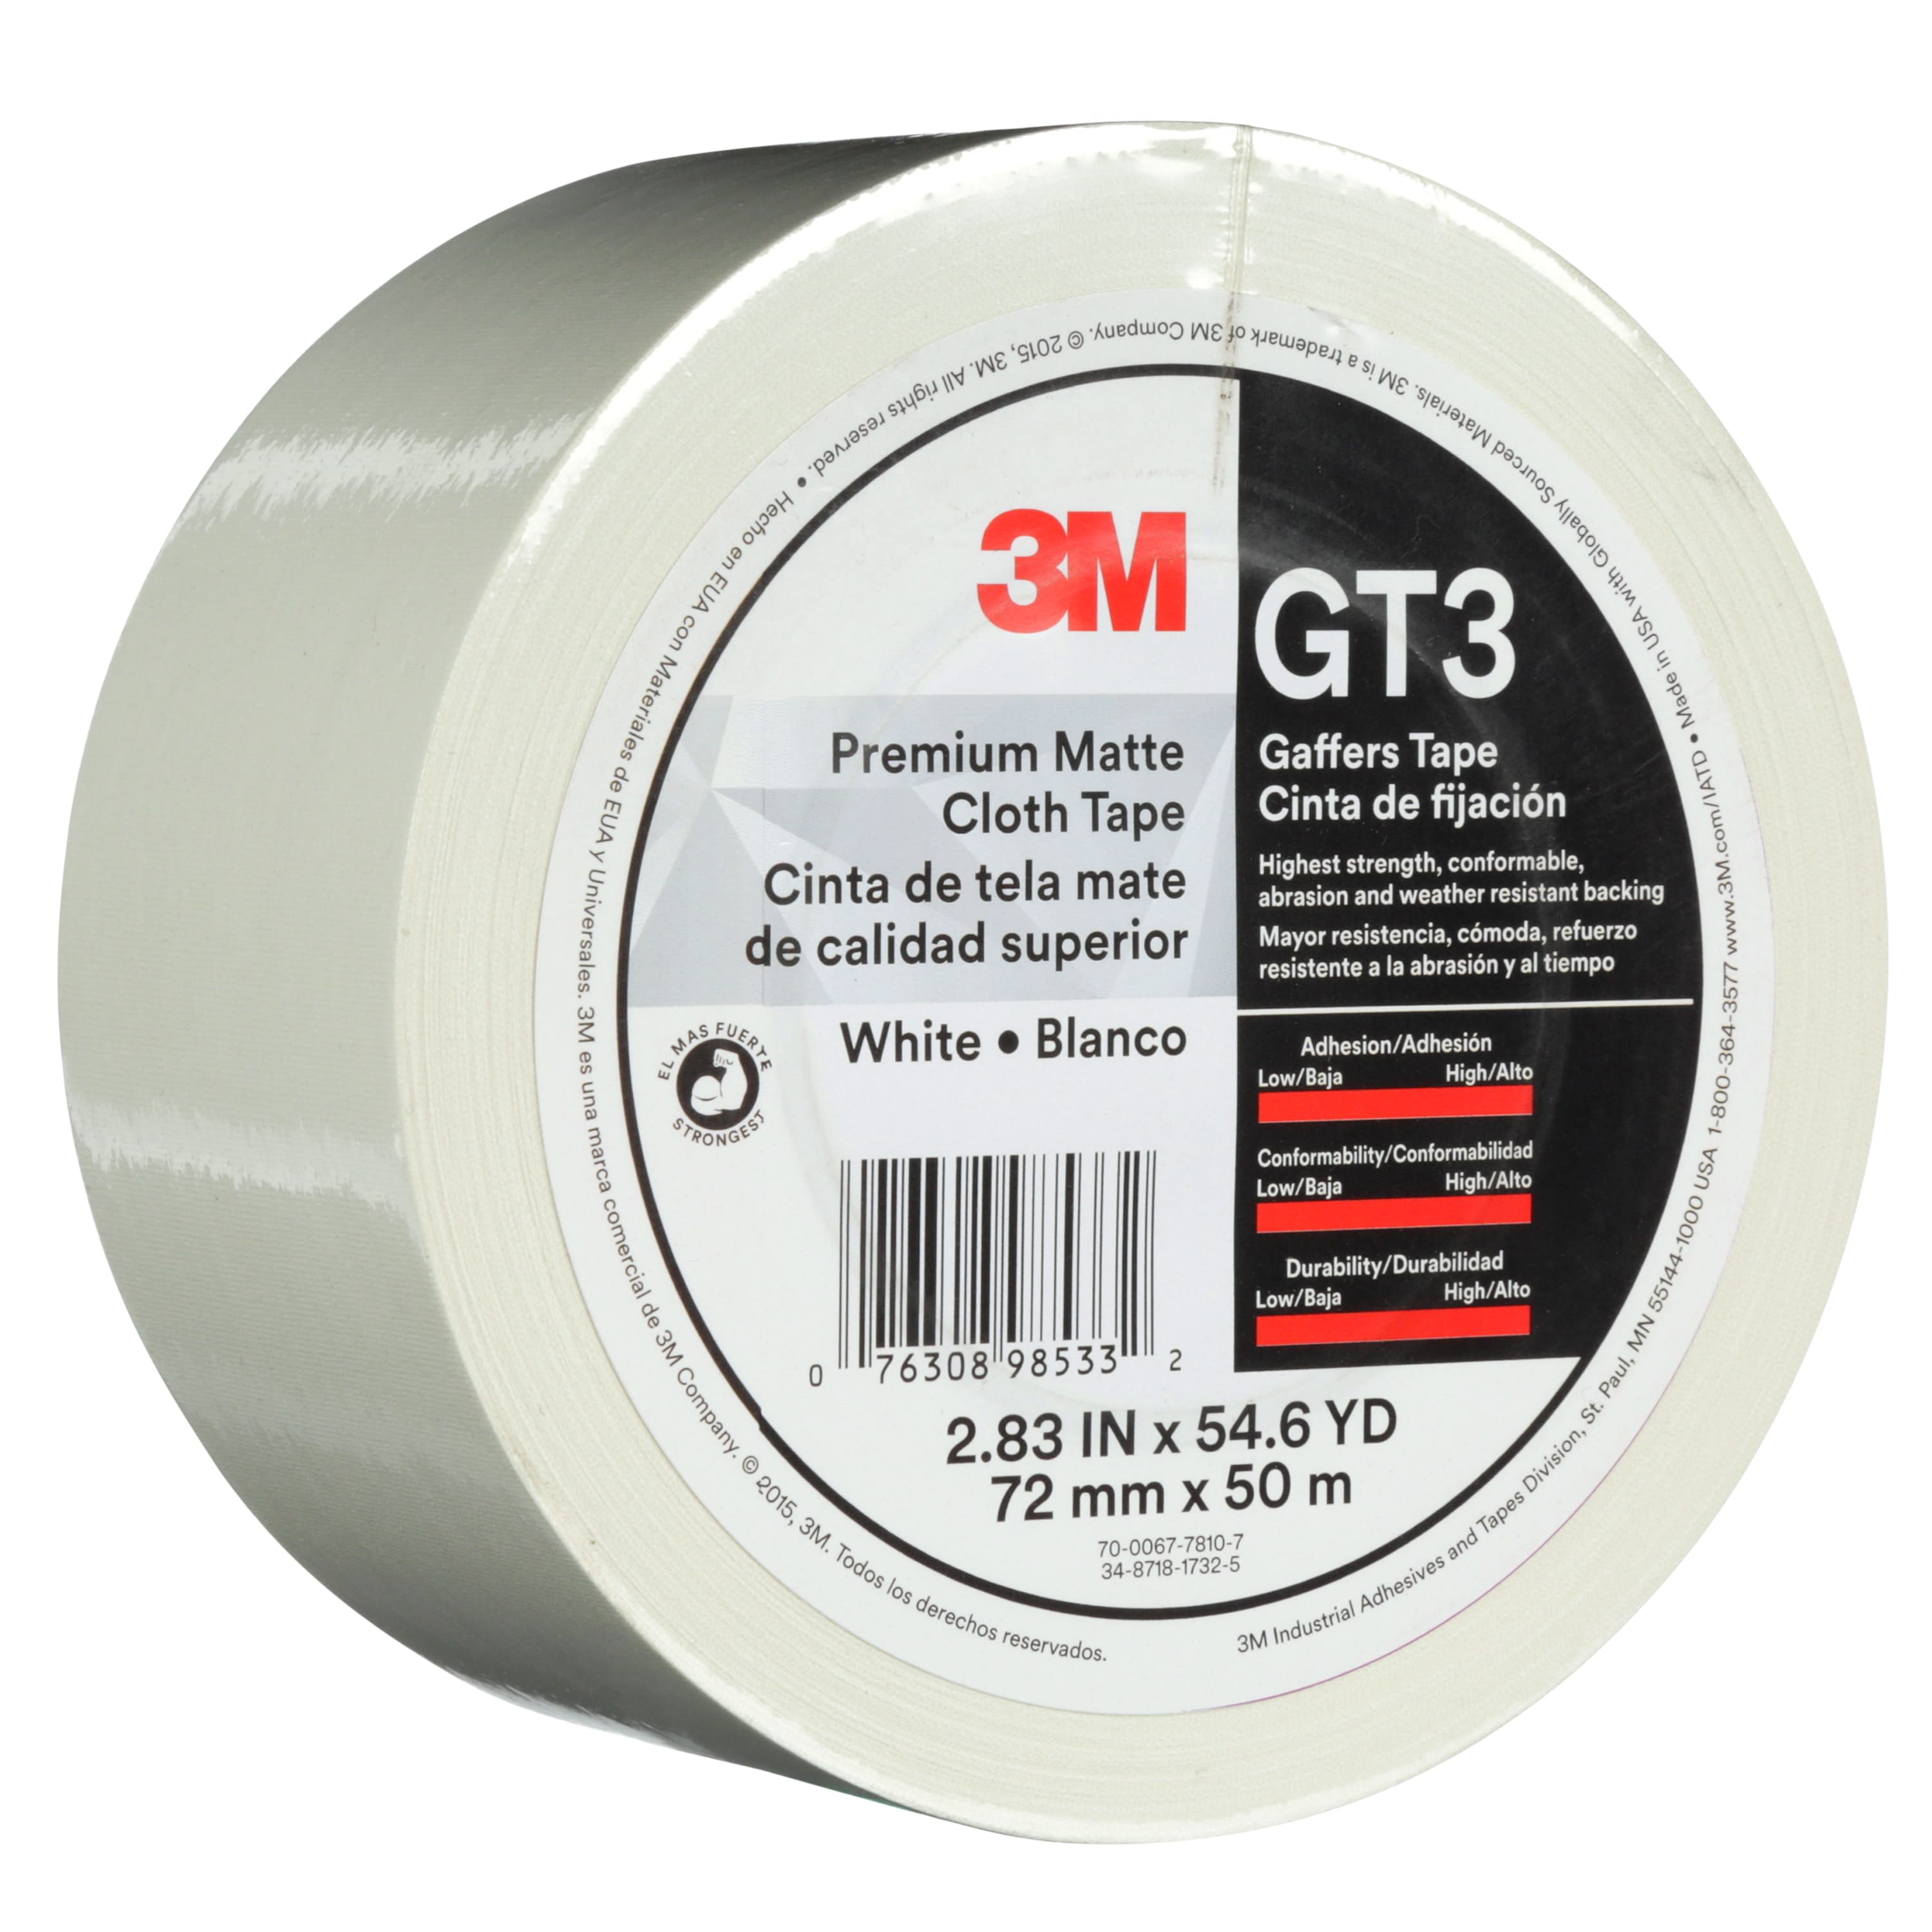 3M™ Premium Matte Cloth (Gaffers) Tape GT3, White, 72 mm x 50 m, 11 mil,
16 per case